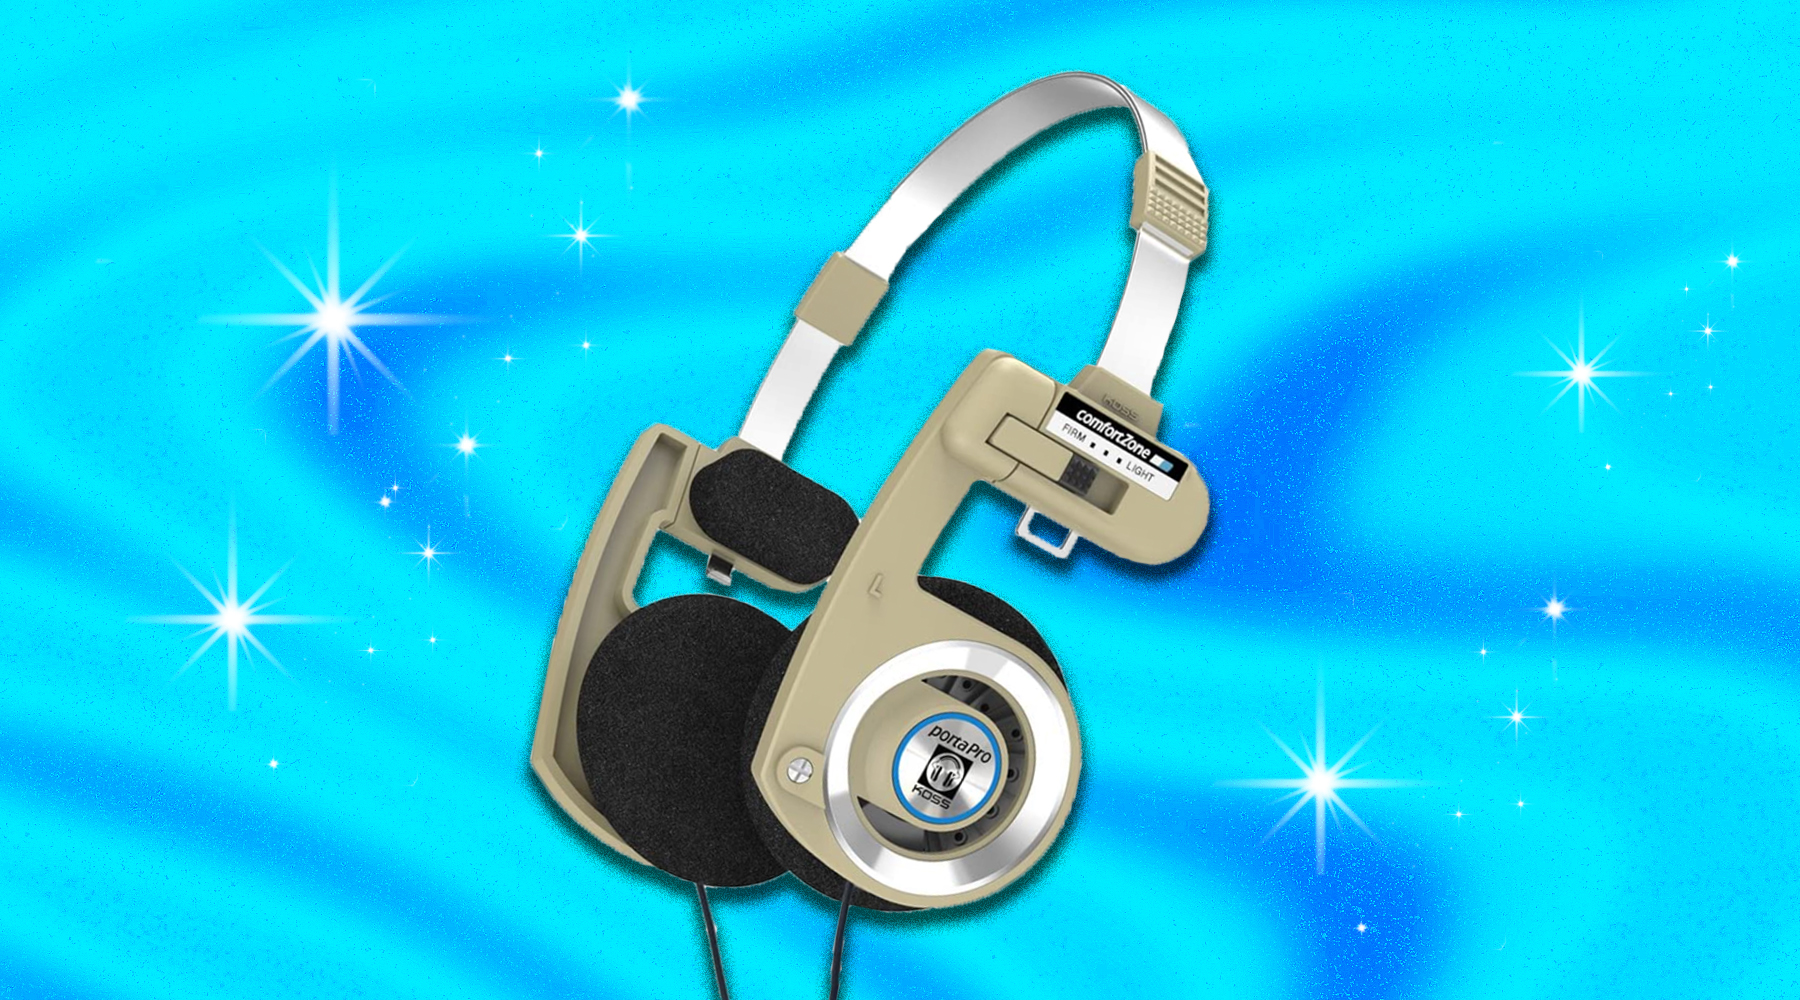  Koss Porta Pro Classic On-Ear Headphones, Retro Style